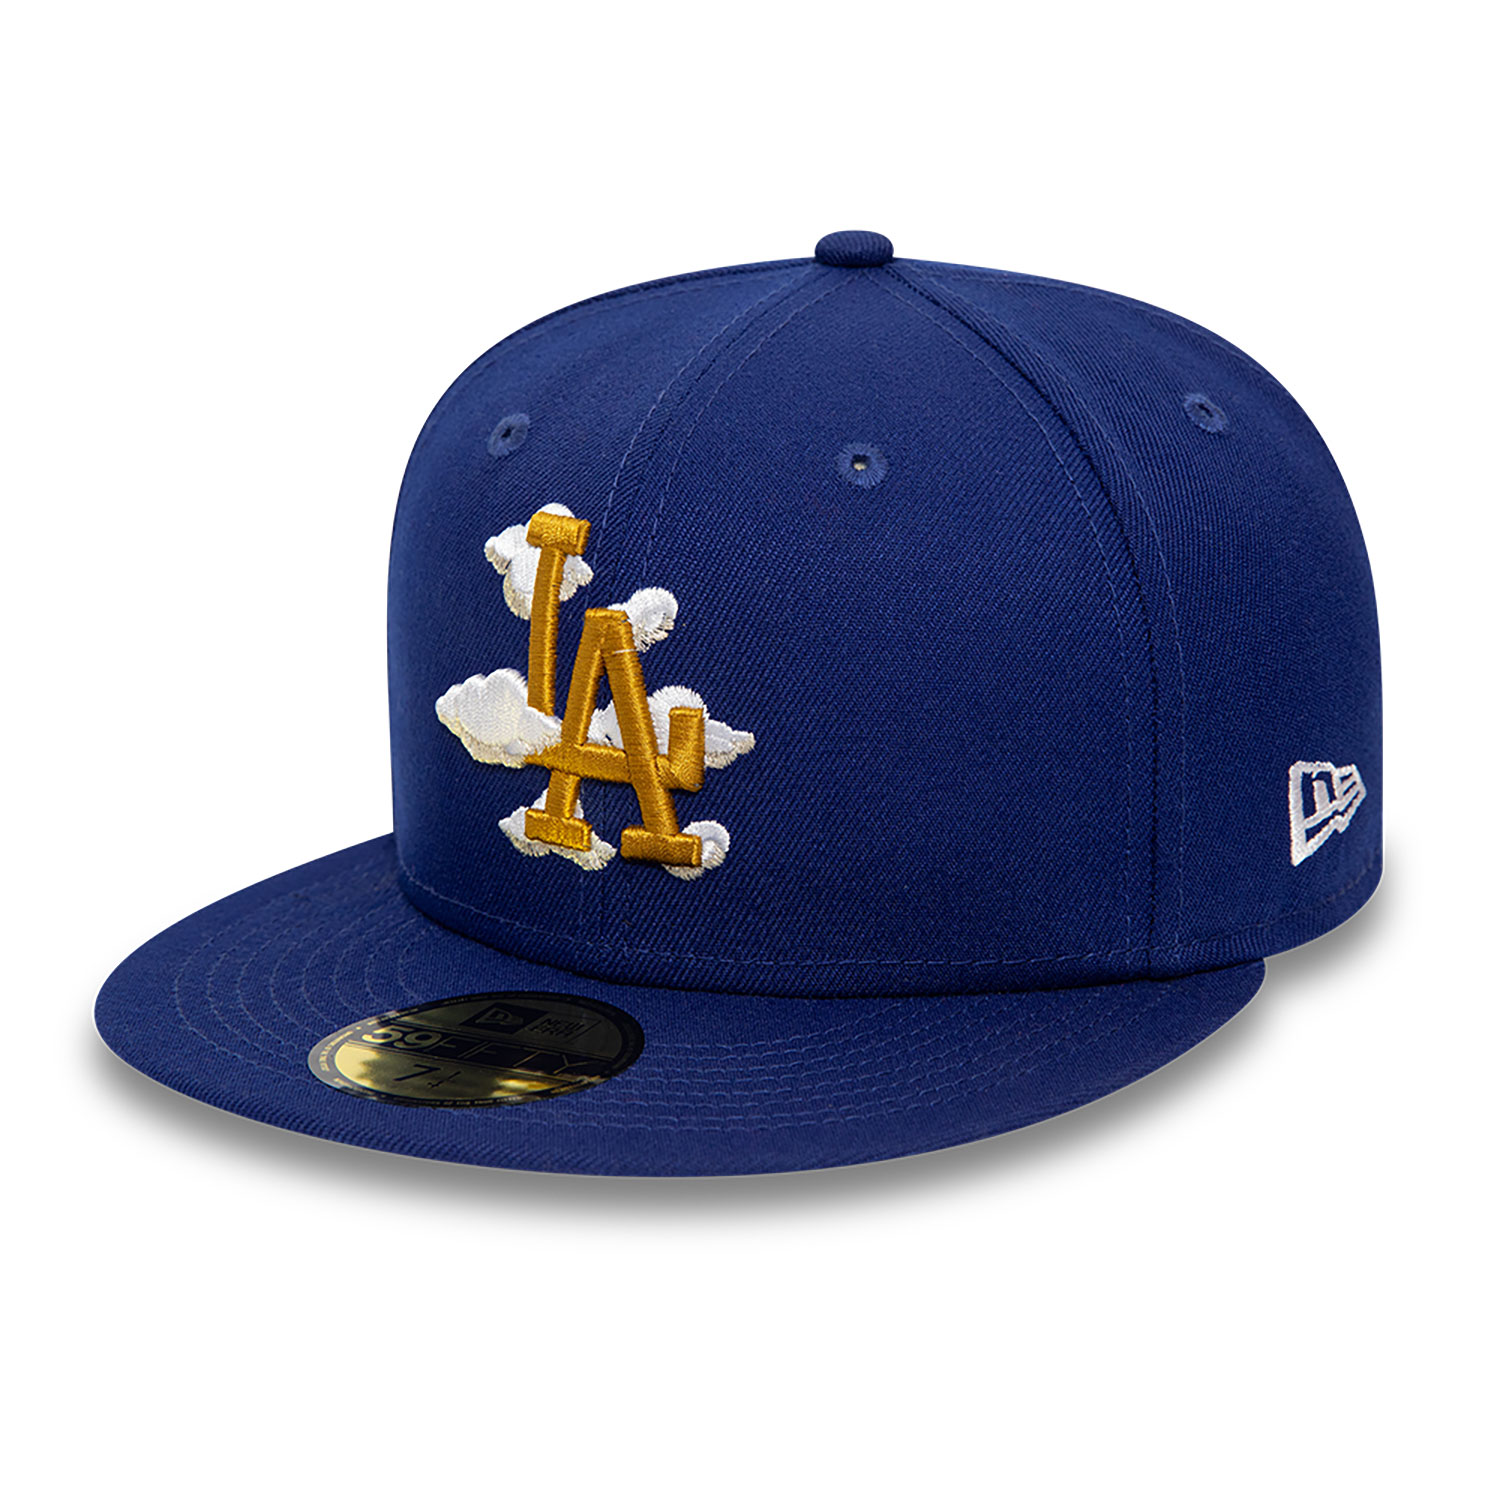 LA Dodgers Team Cloud Blue 59FIFTY Fitted Cap